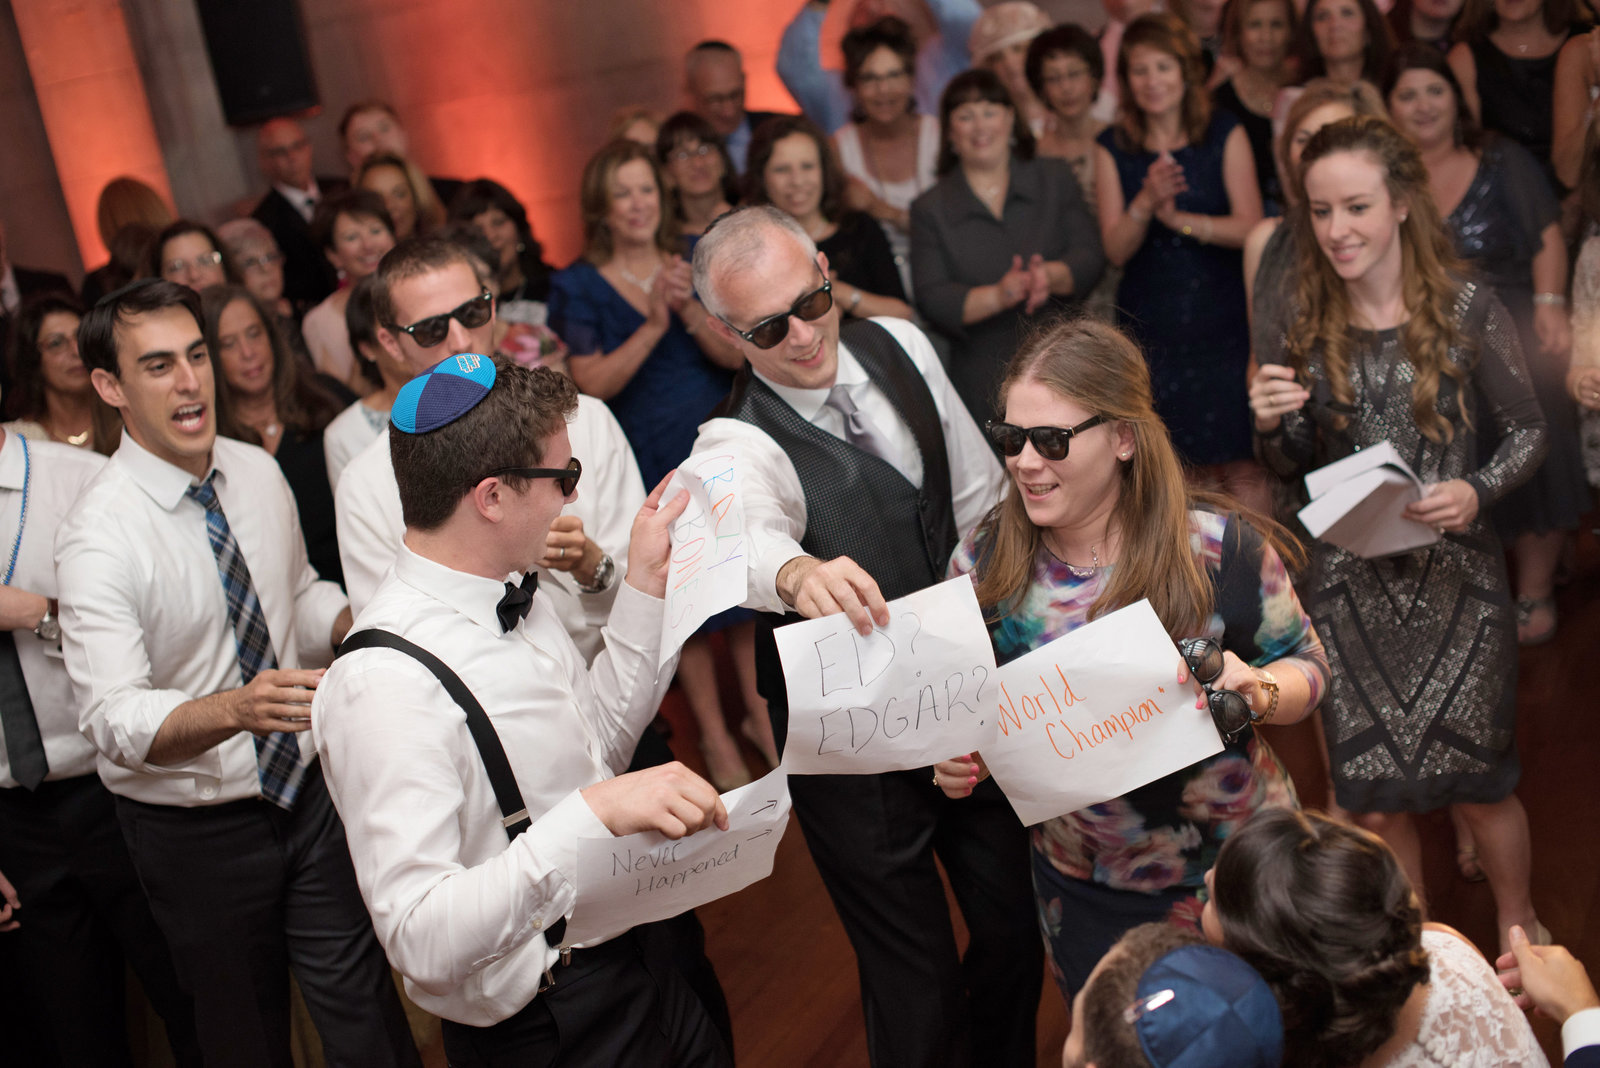 Jewish wedding ceremony traditional dances